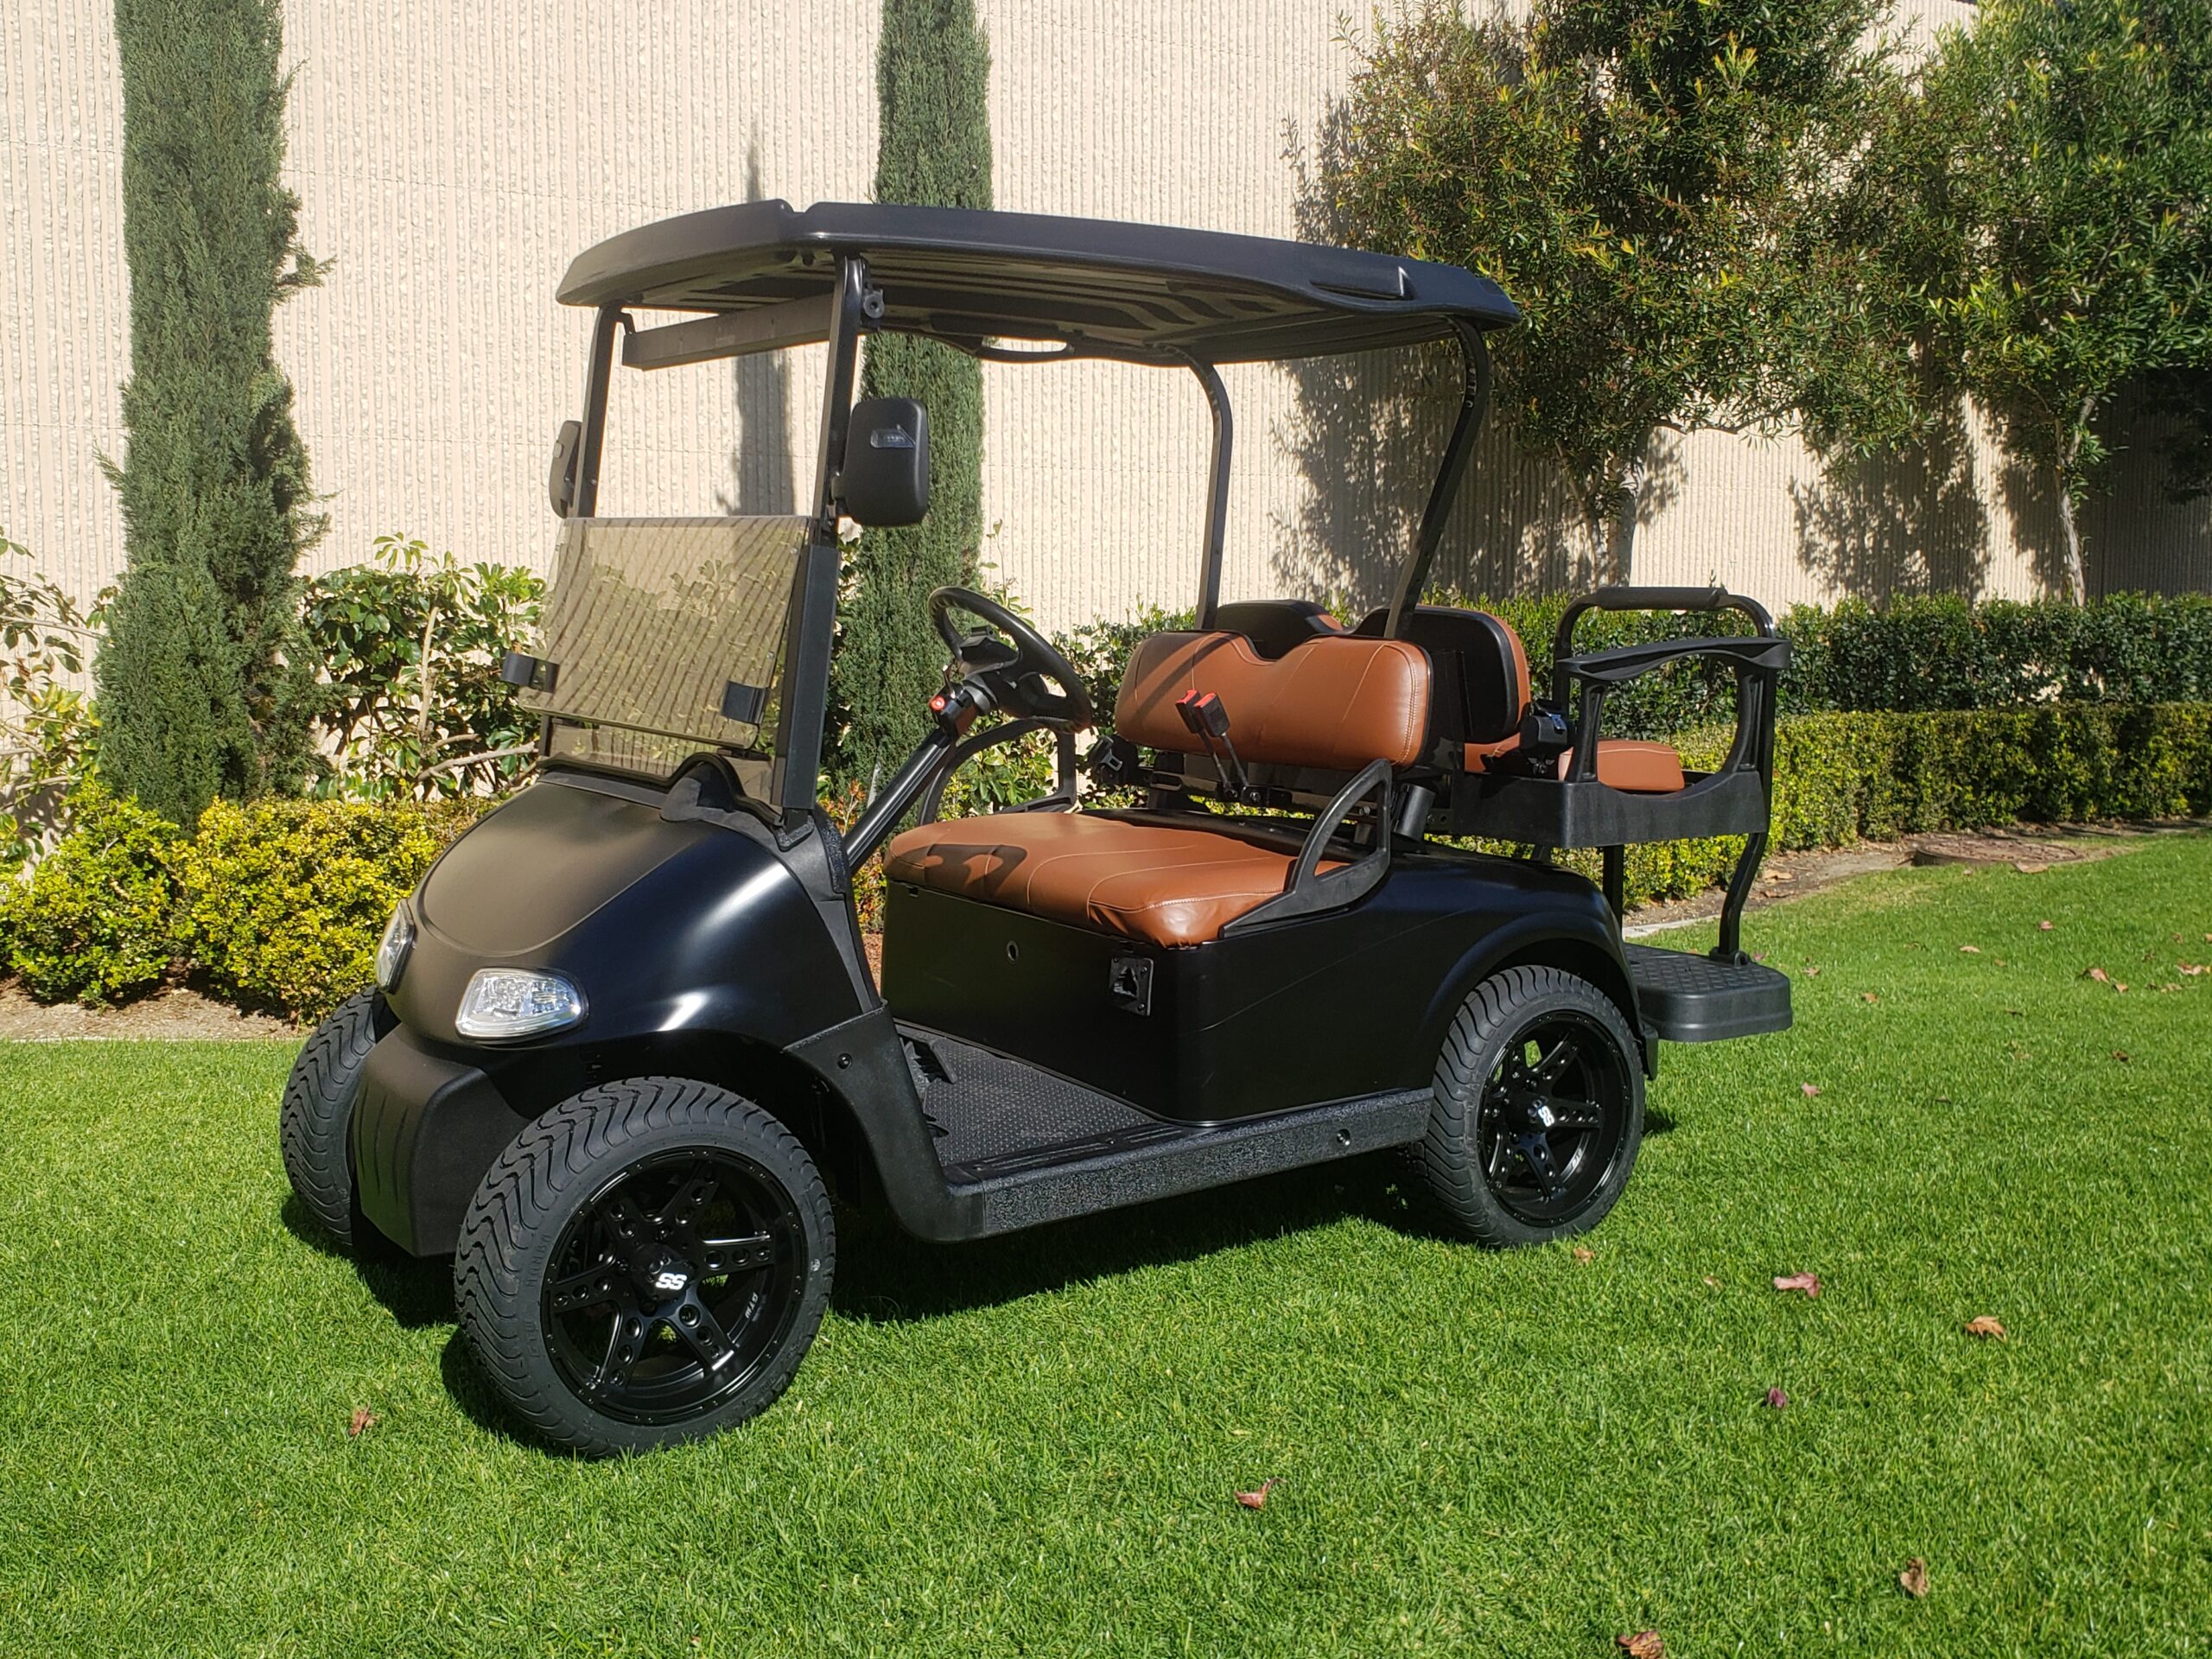 Ezgo Rxv Low Profile 4 Passenger Golf Cart – Matte Black Body, #B51